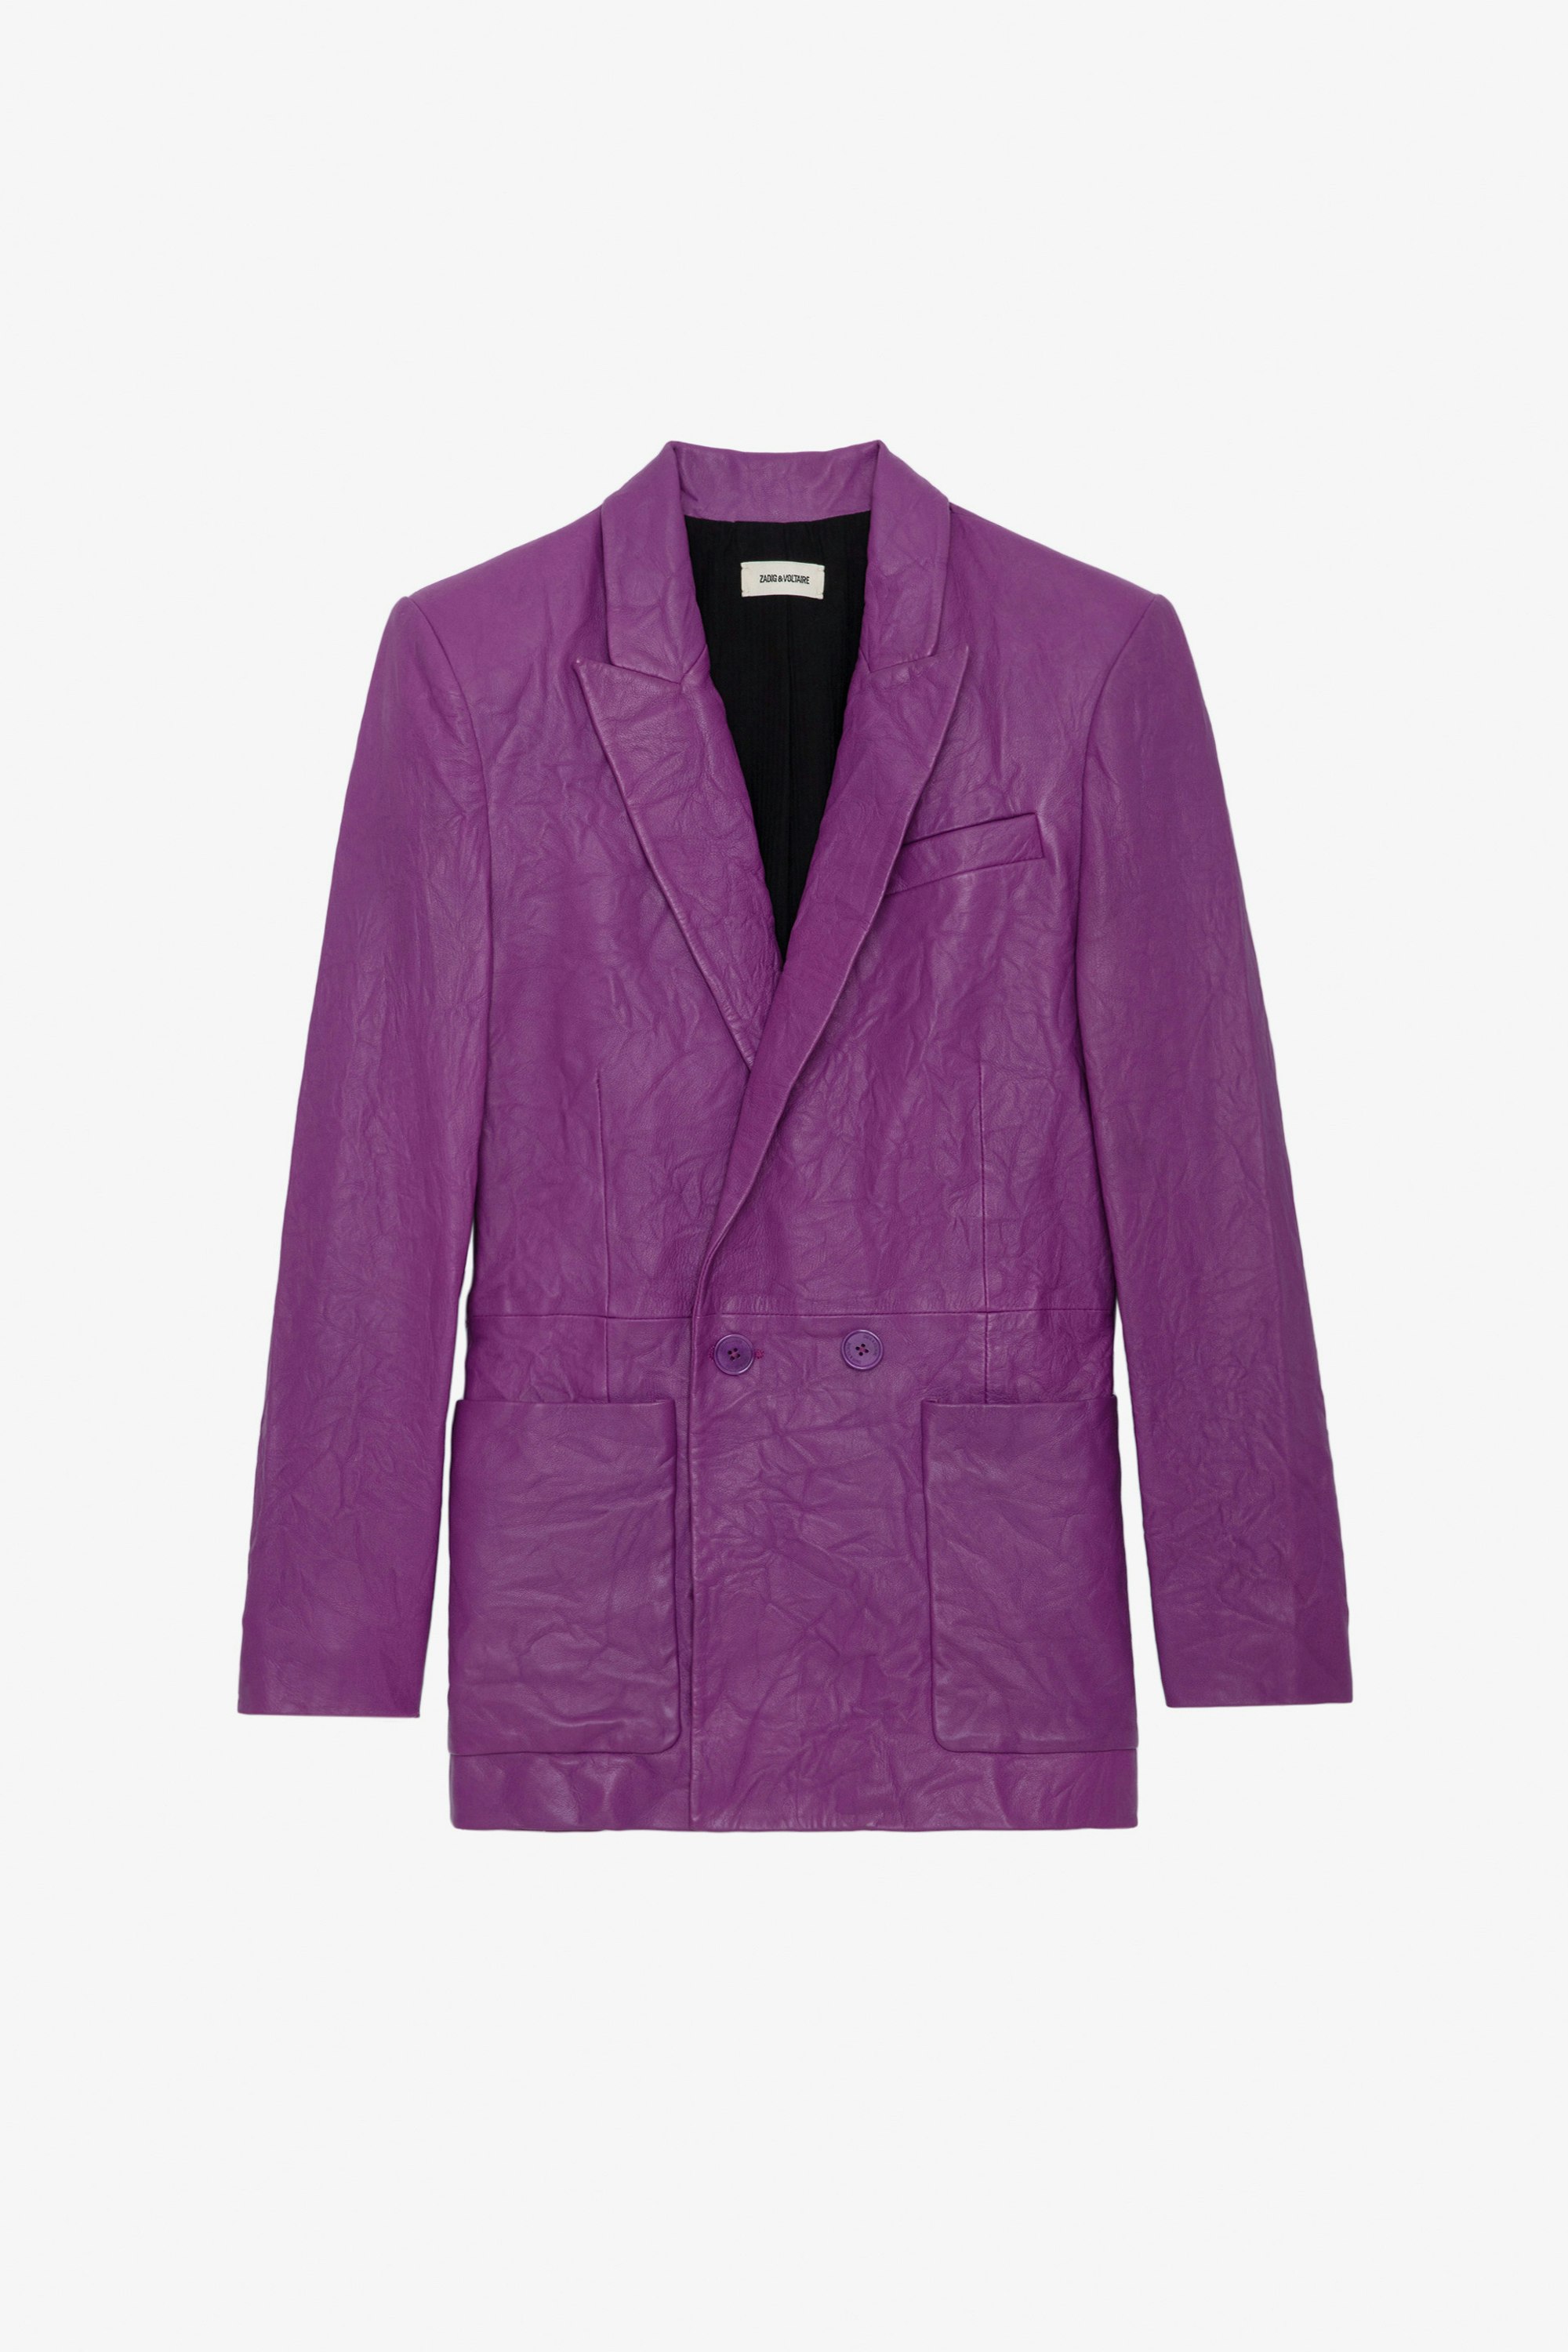 Visko Crinkled Leather Blazer - Women’s purple crinkled leather blazer with button fastening and pockets.